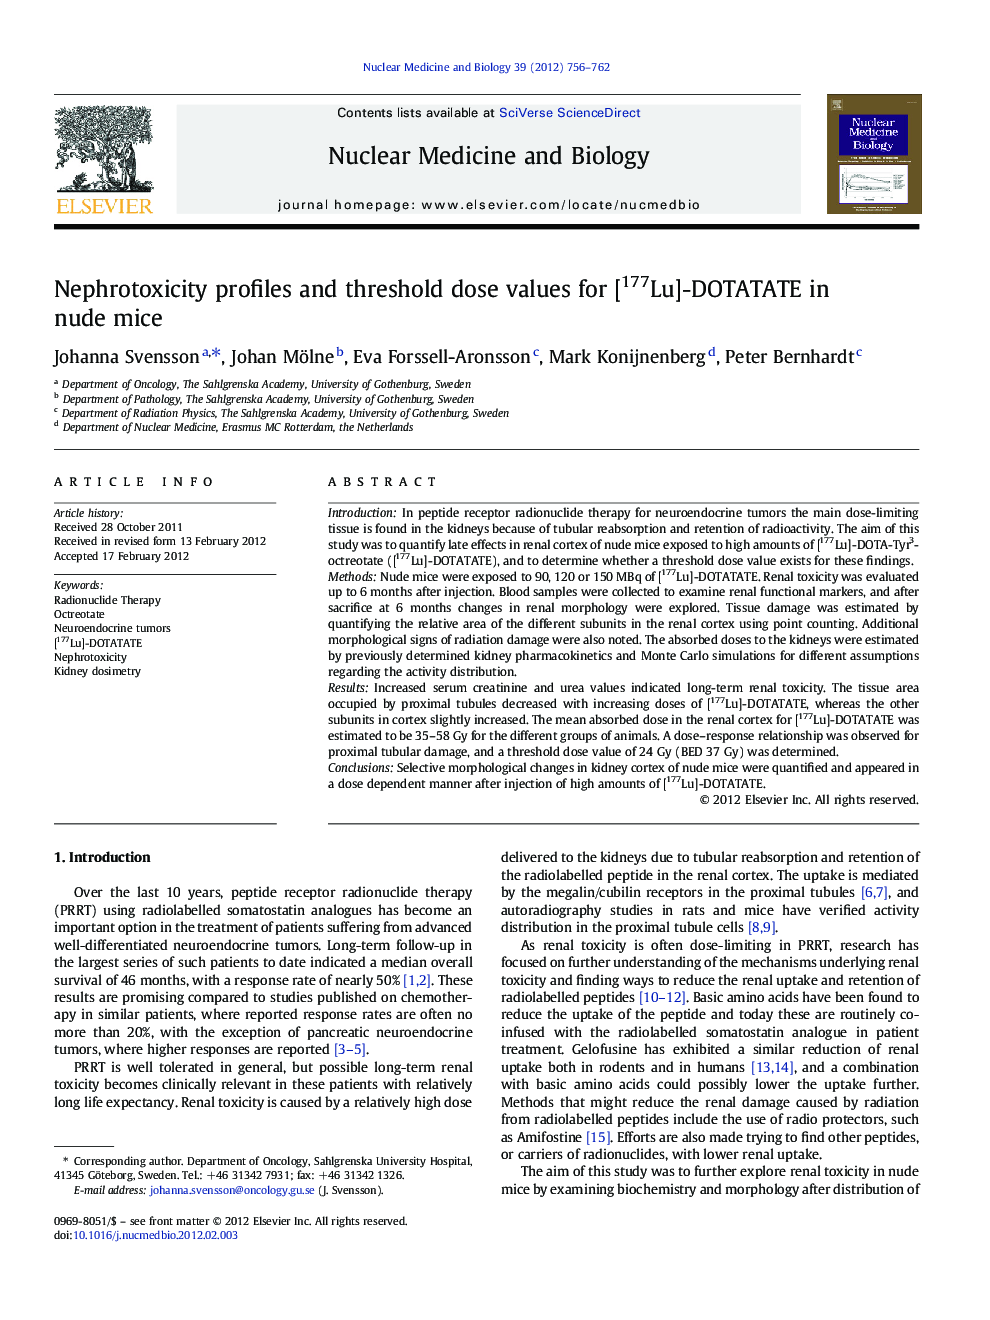 Nephrotoxicity profiles and threshold dose values for [177Lu]-DOTATATE in nude mice